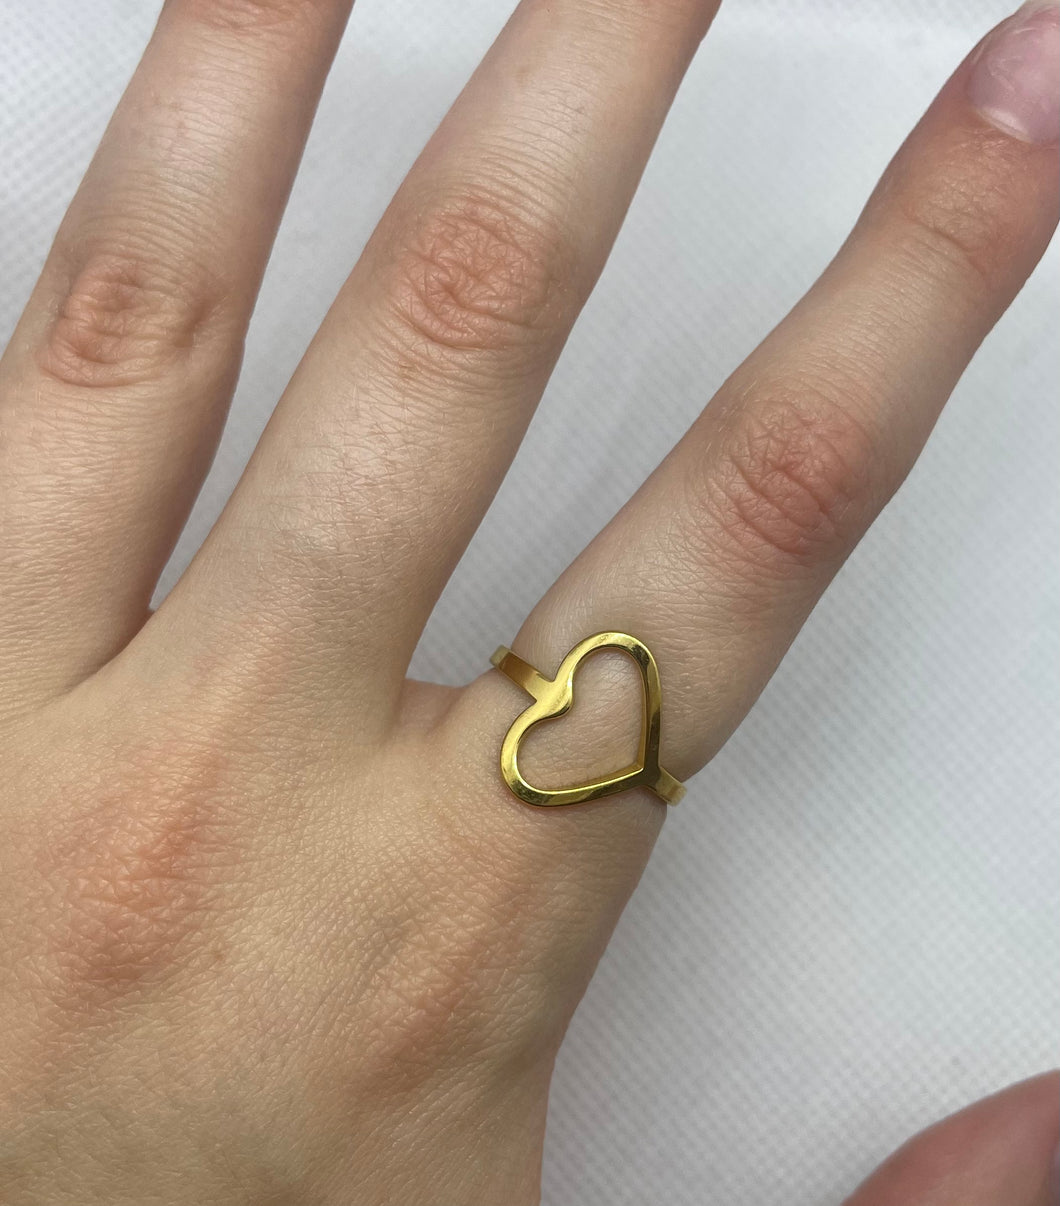 Gold sideways heart ring